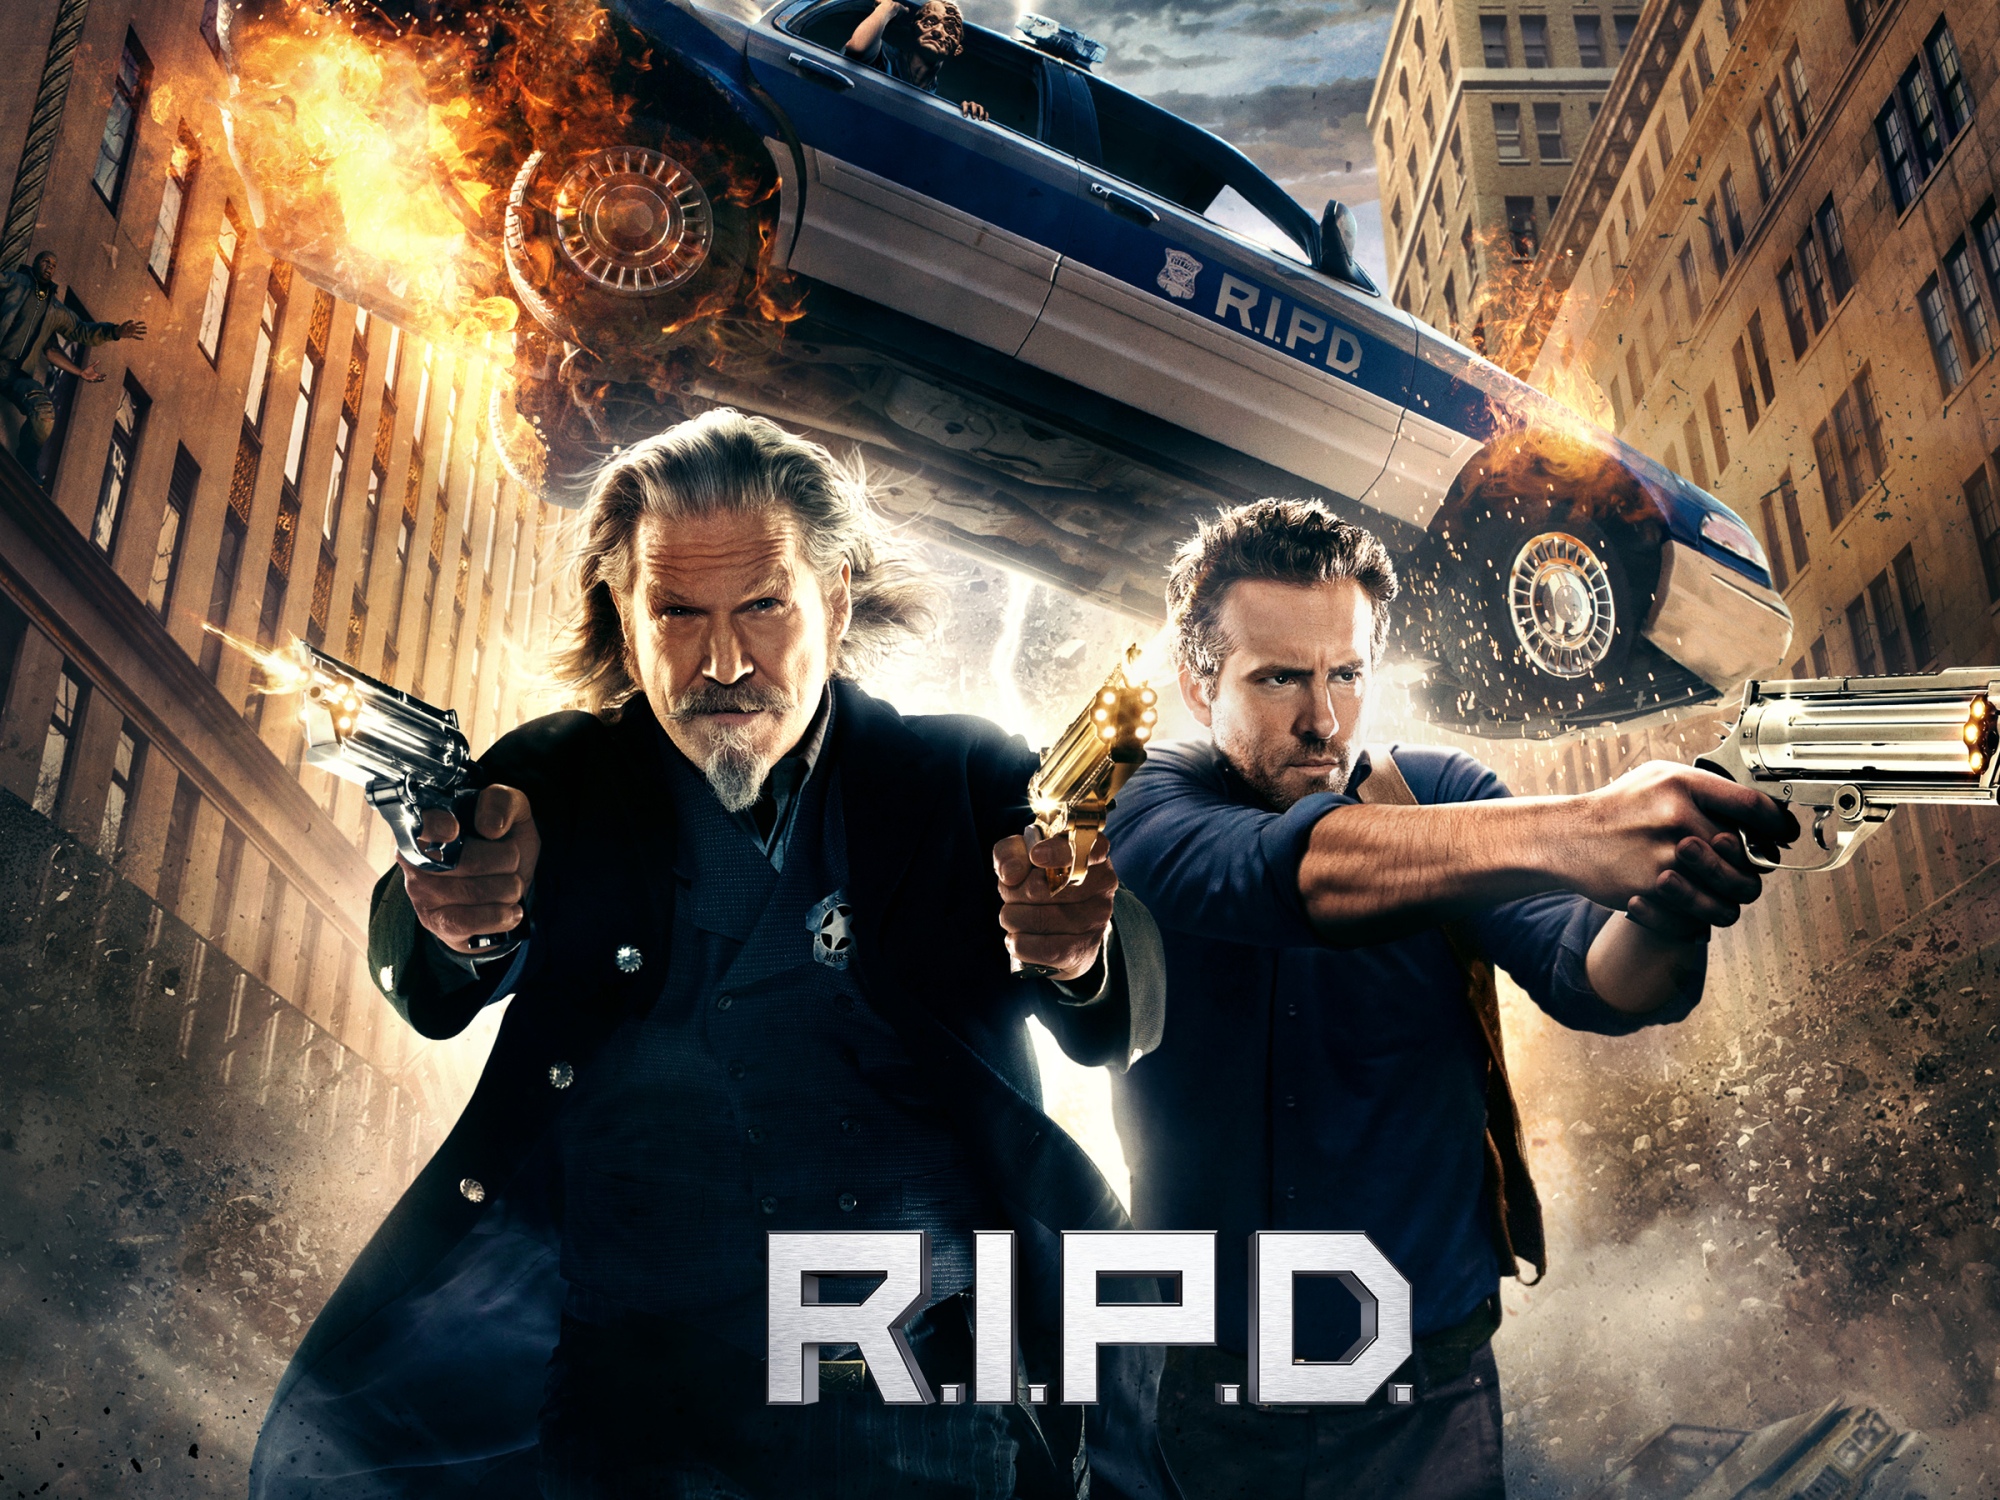 Why Ryan Reynolds Isn't In RIPD 2